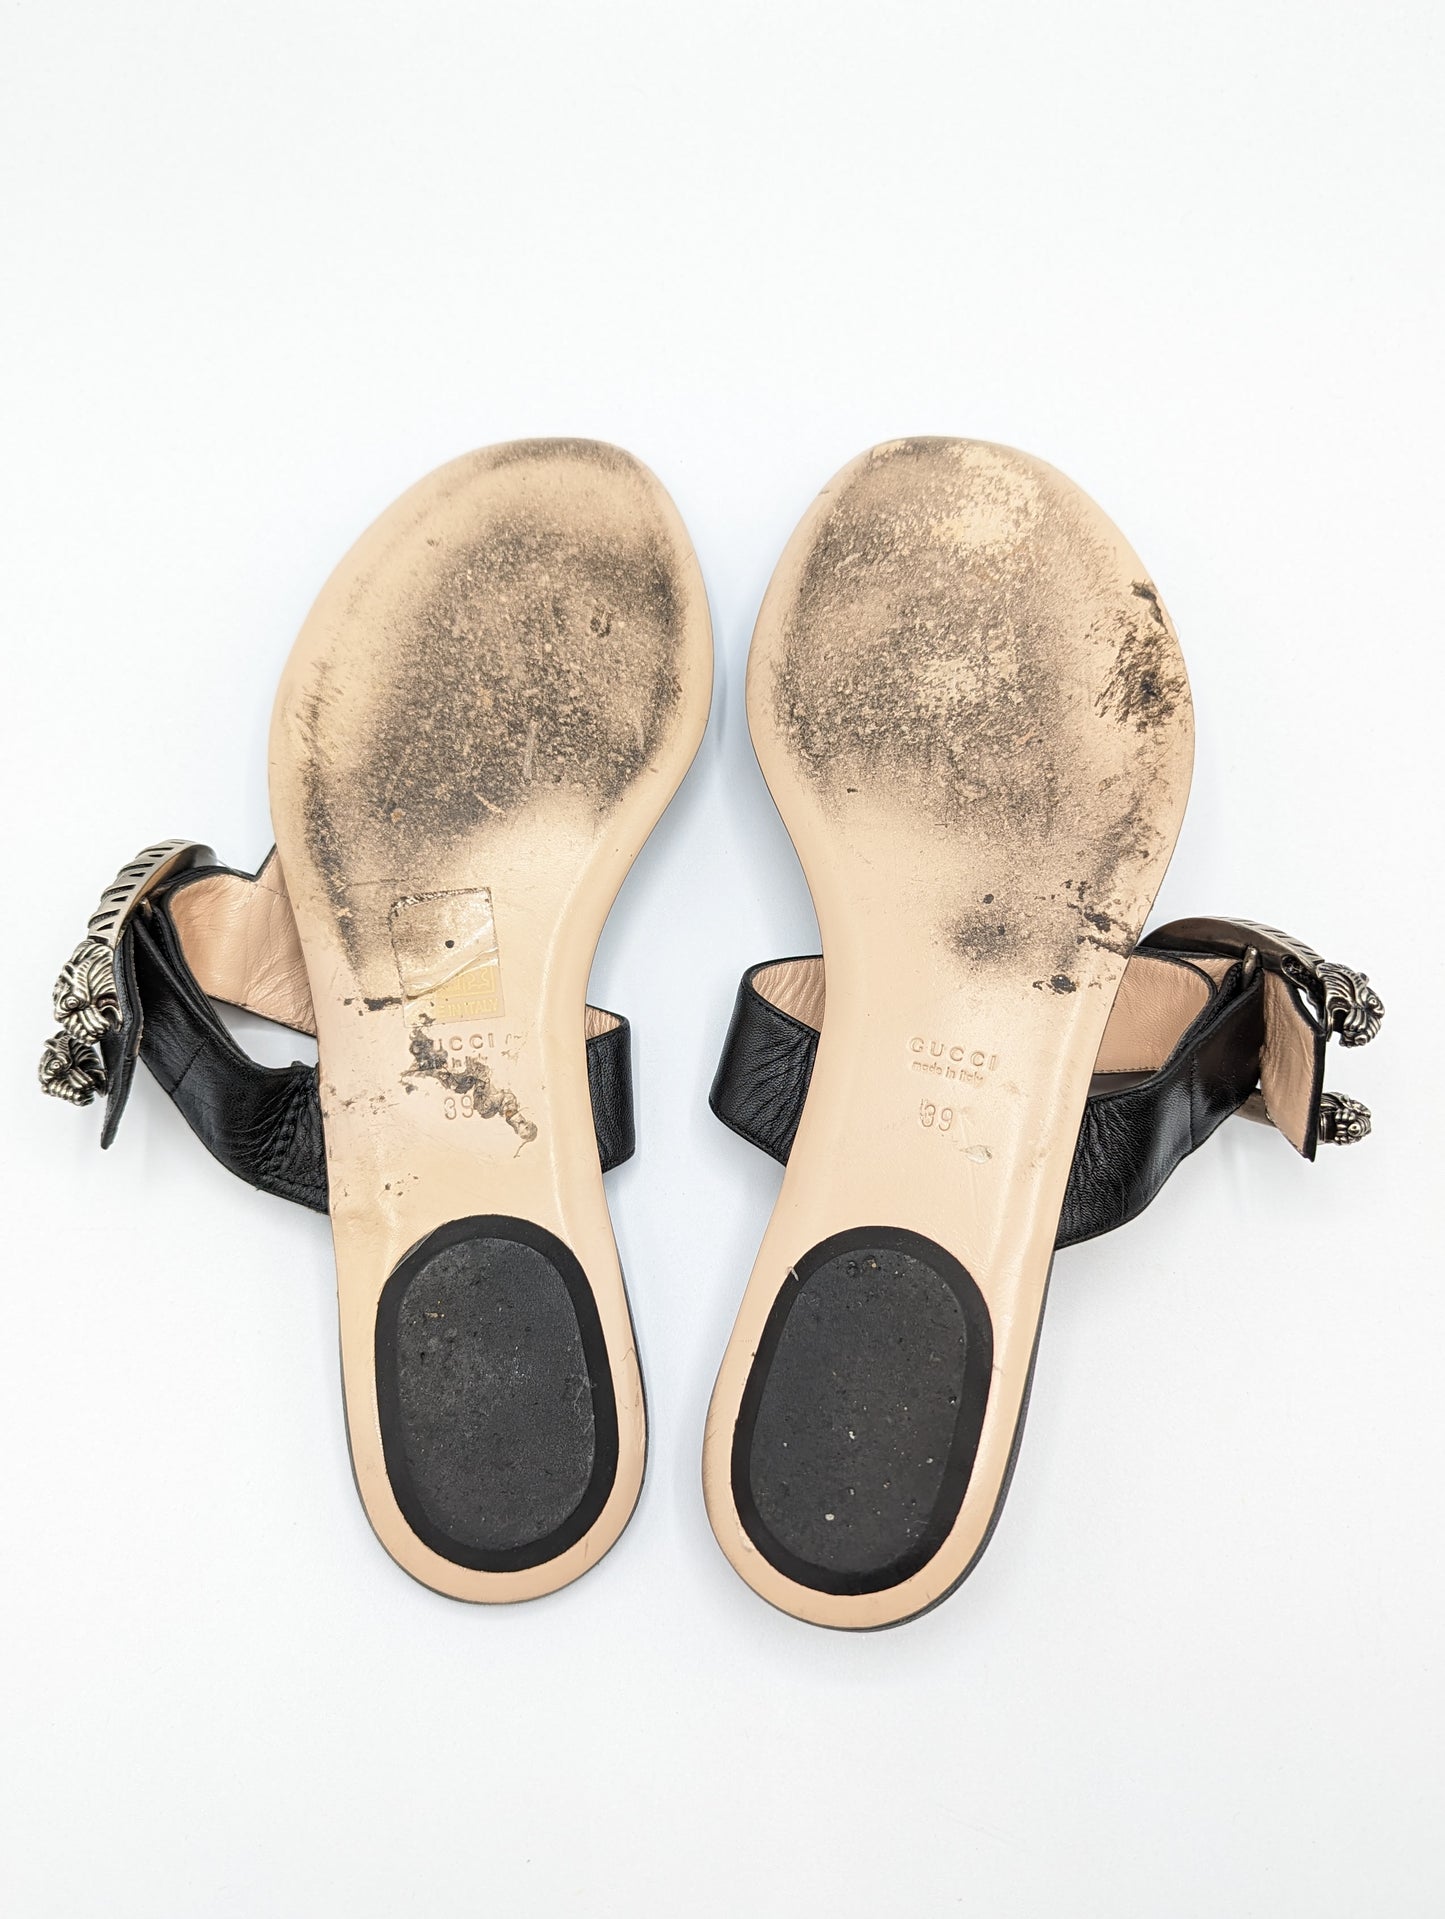 Gucci Dionysus Black Leather Sandals Size 39